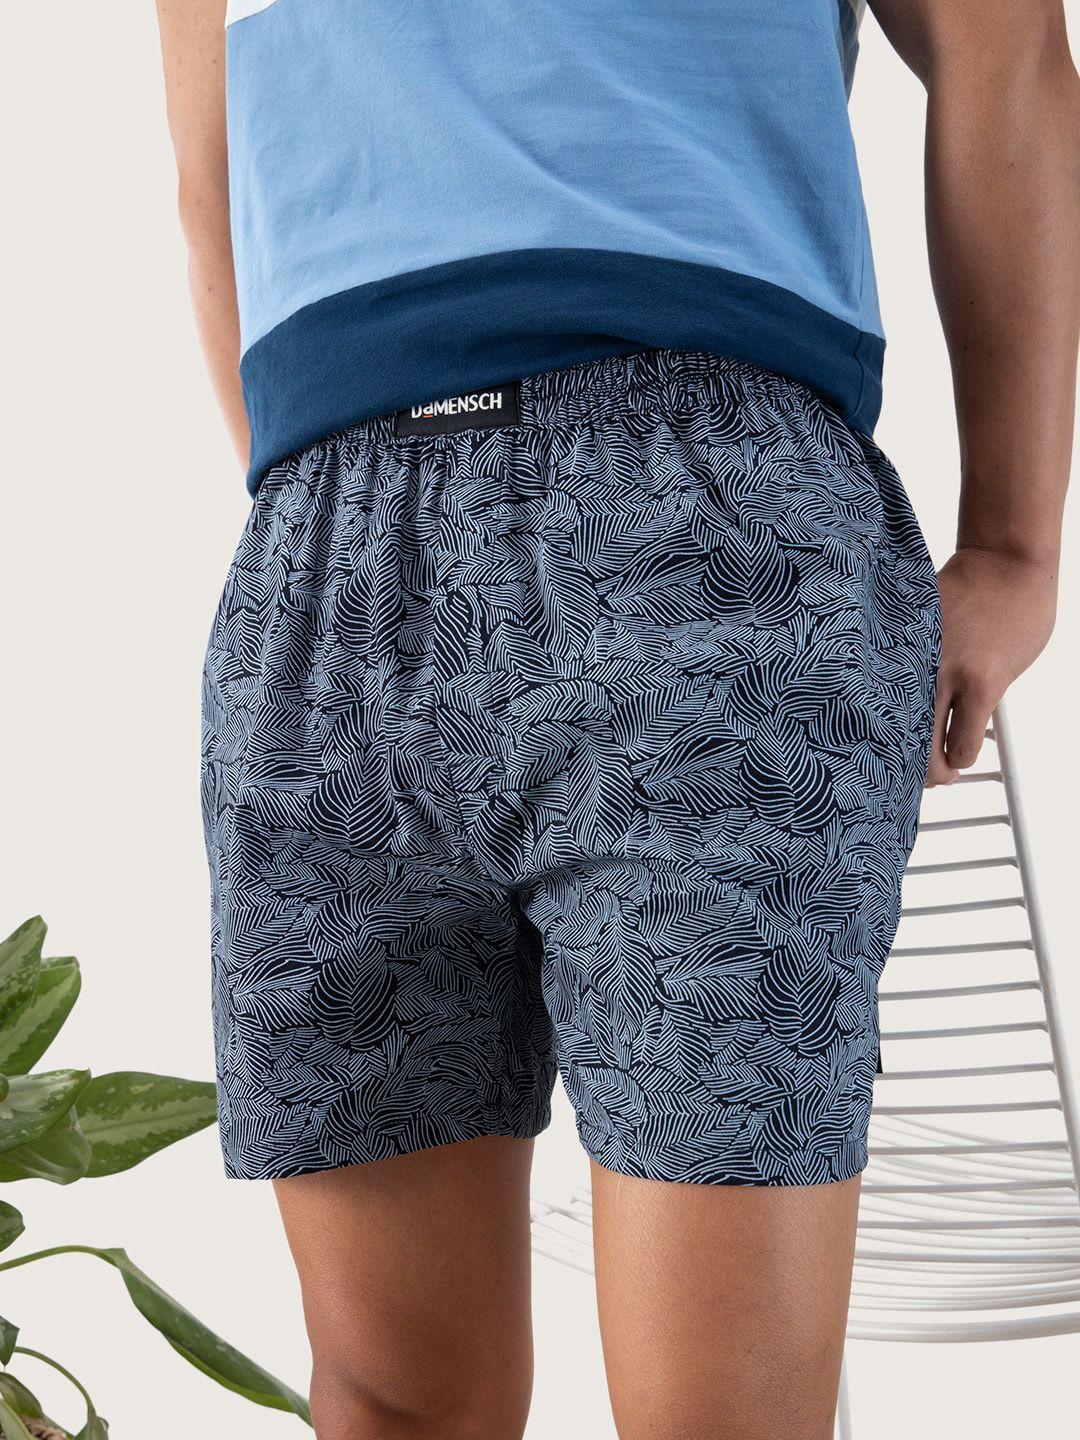 damensch-men-blue-printed--pure-cotton-boxer-shorts-dam-sld-sbx-gyt